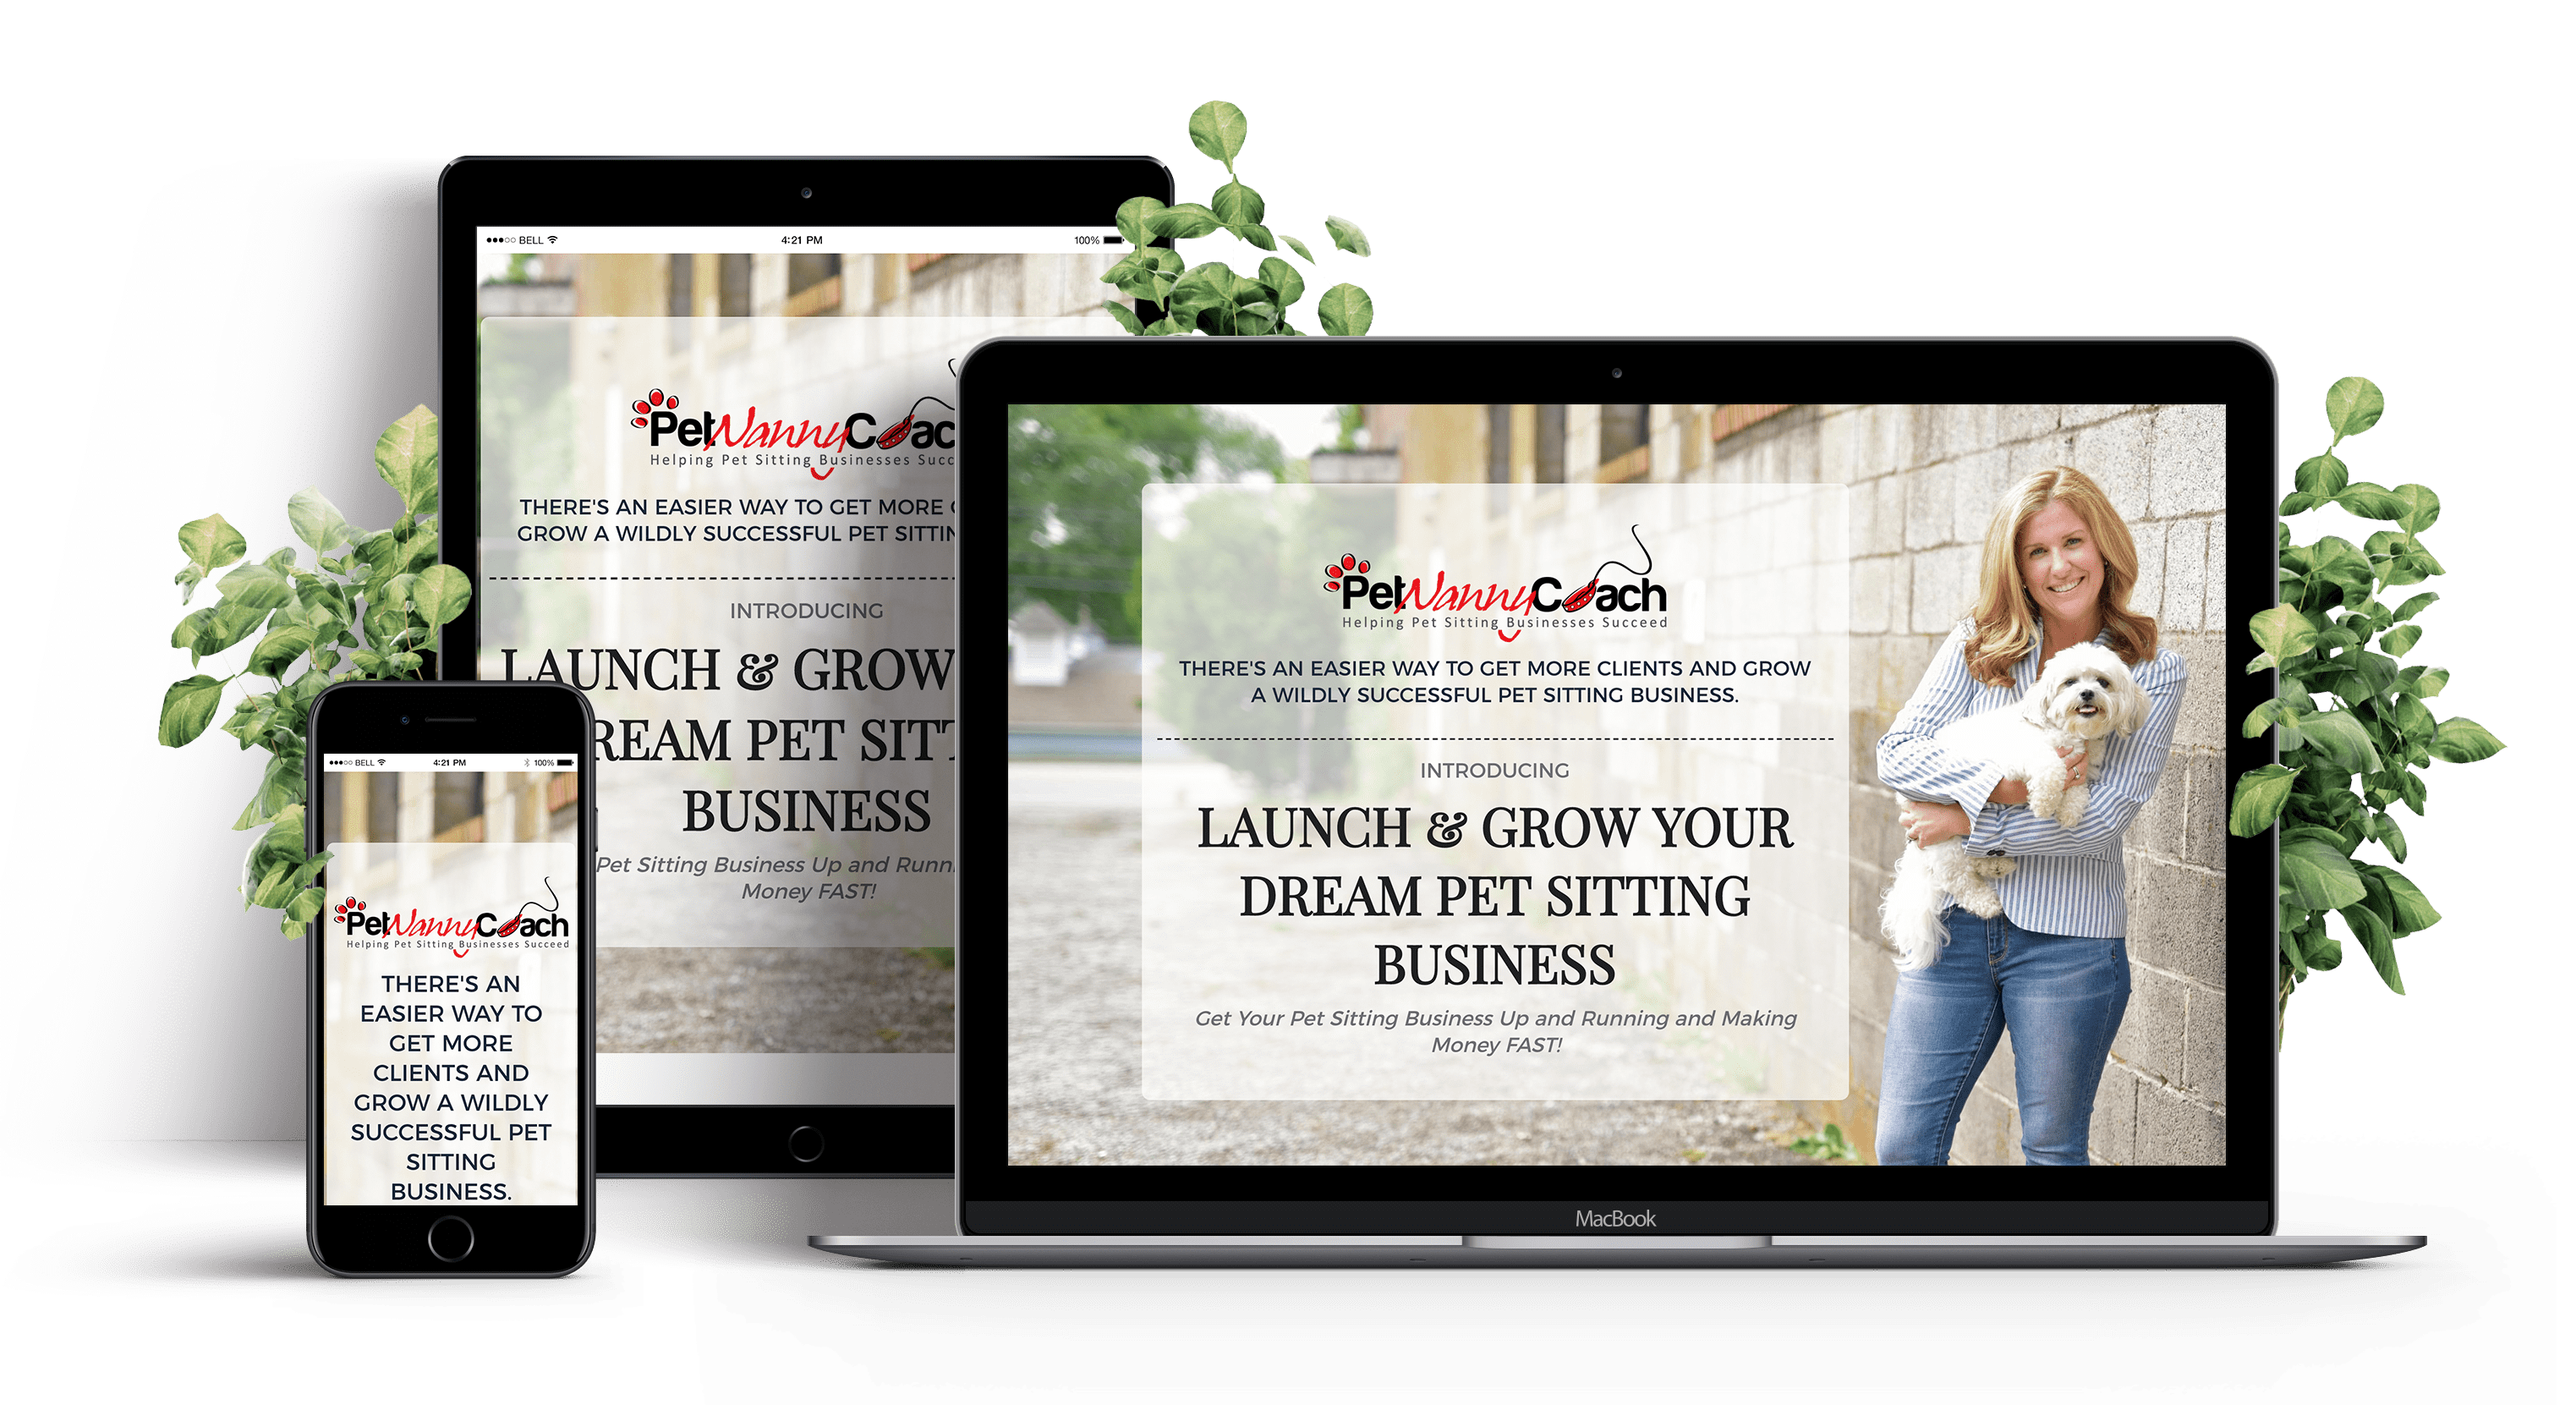 Launch & Grow Your Dream Pet Sitting Business – Long Sales Form